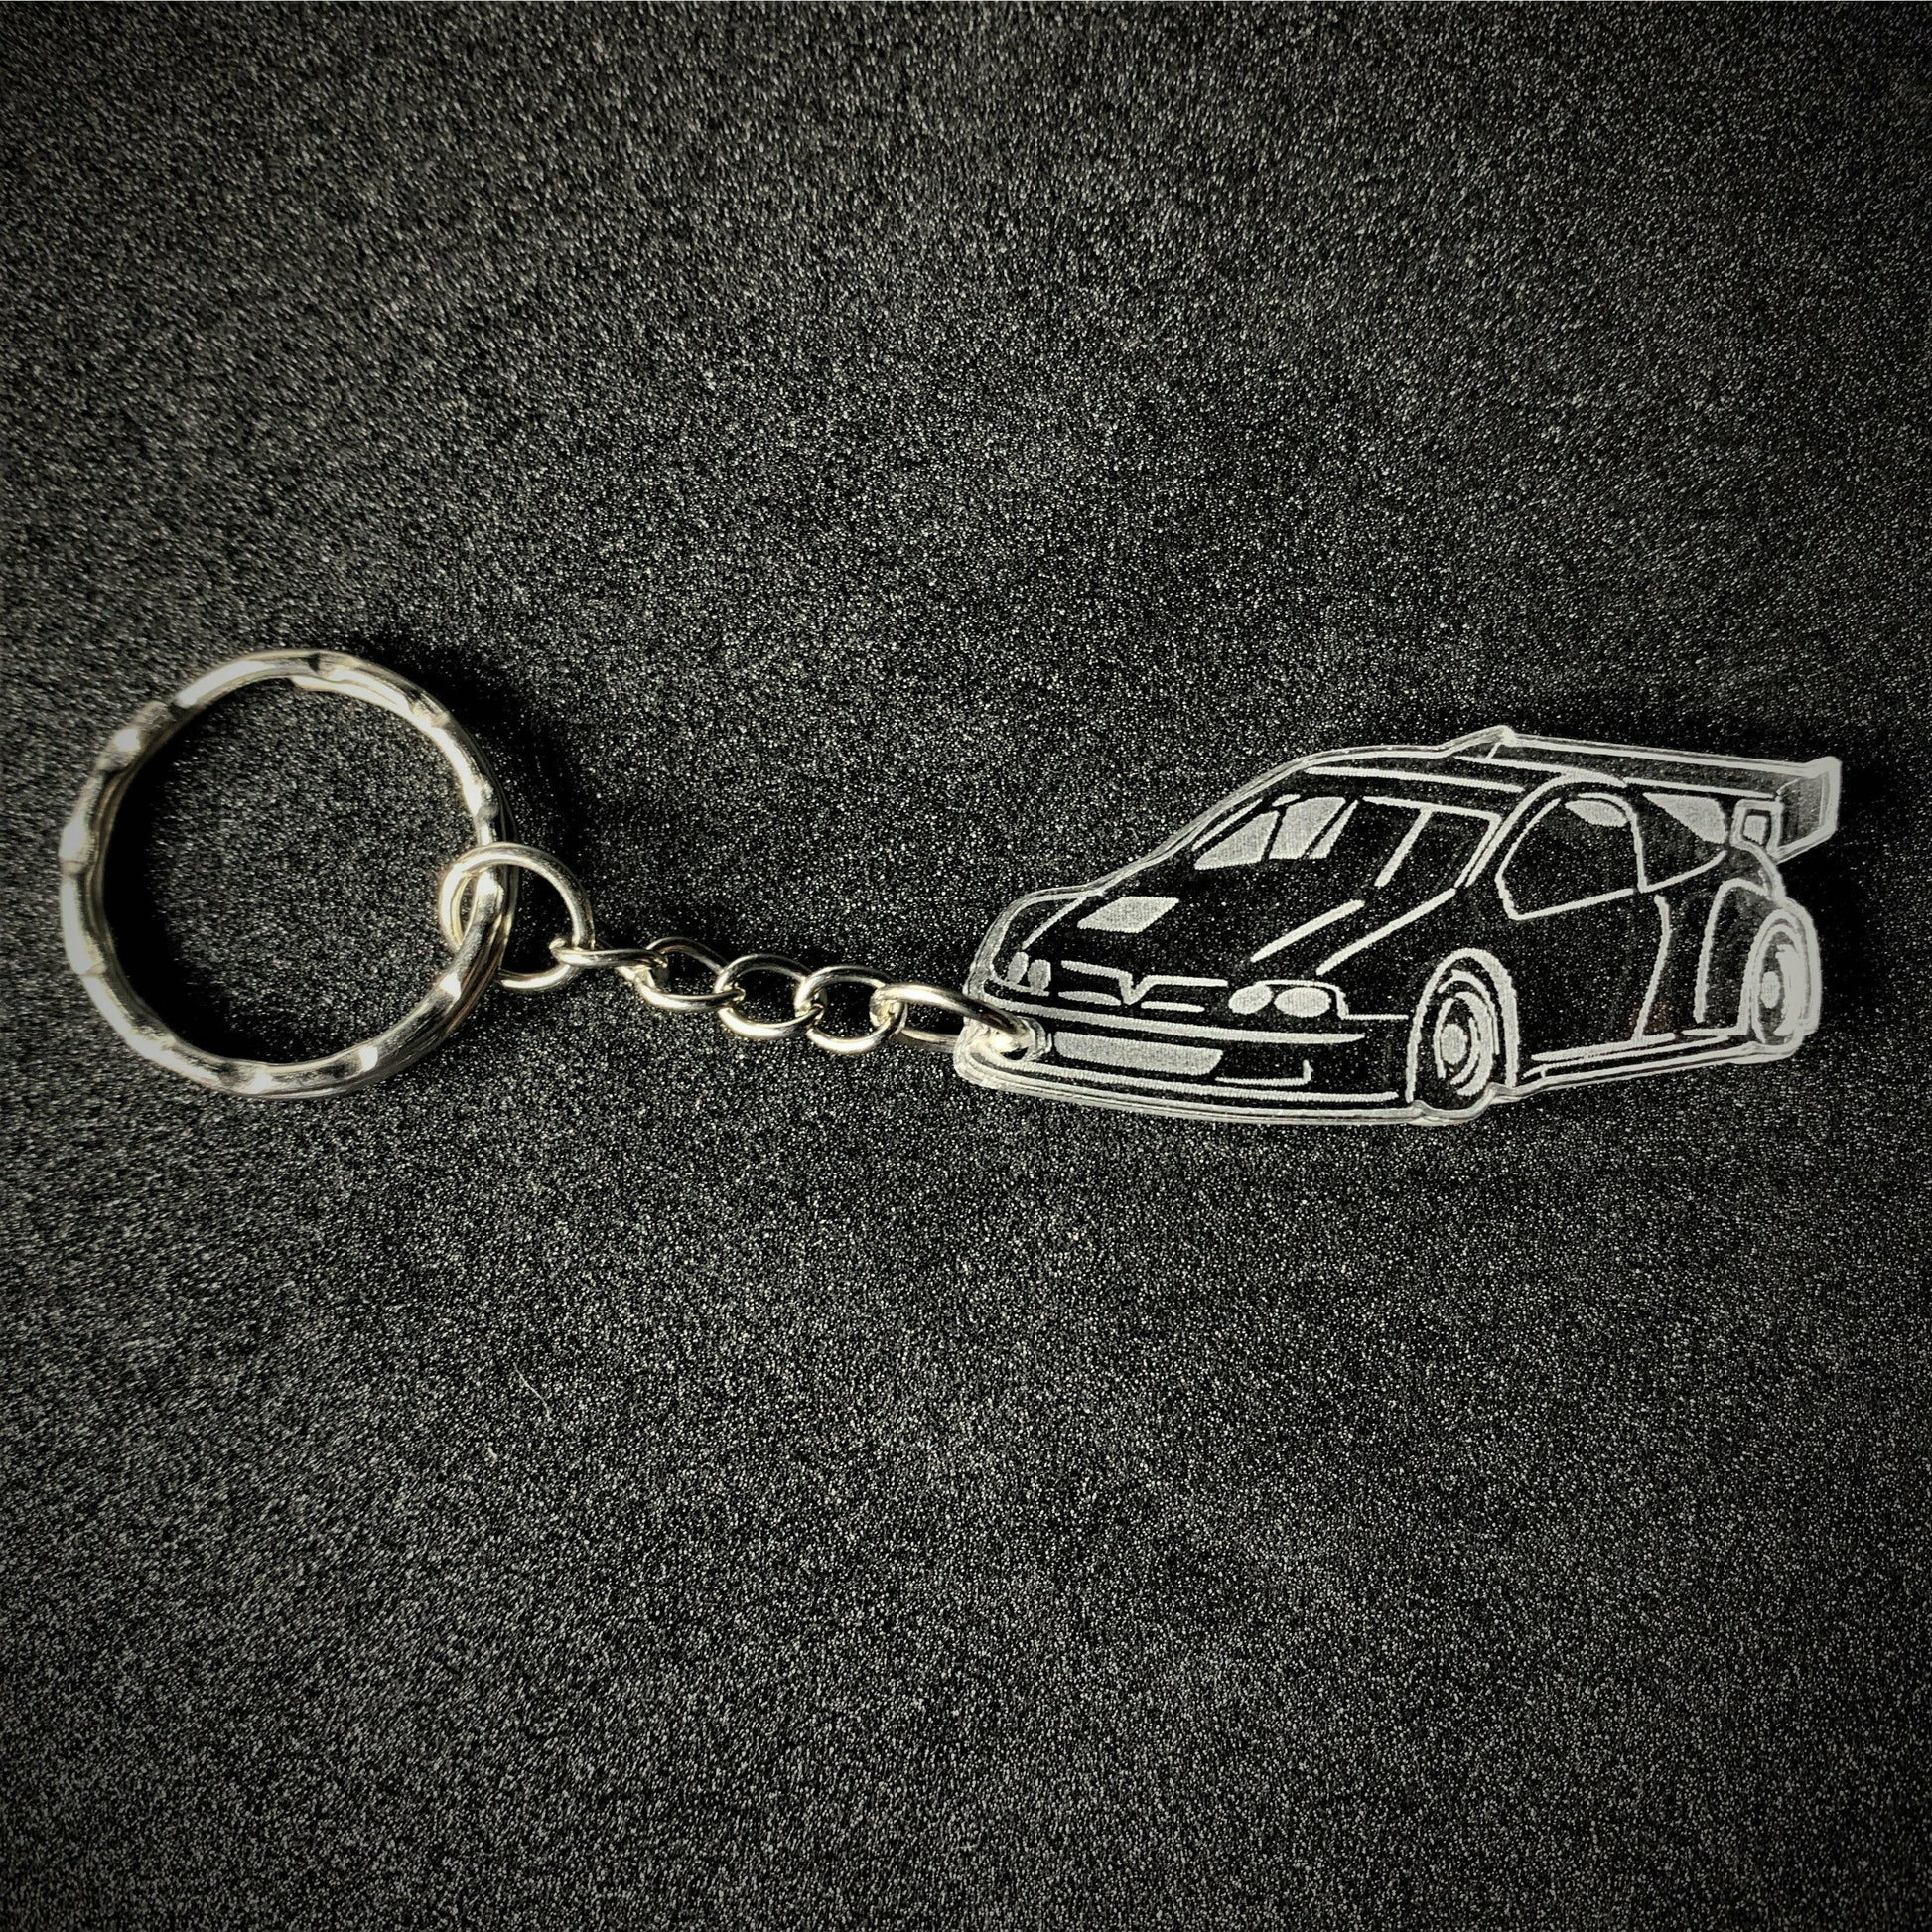 National Hot Rod Keyring - Key Ring - Stock Car & Banger Toy Tracks